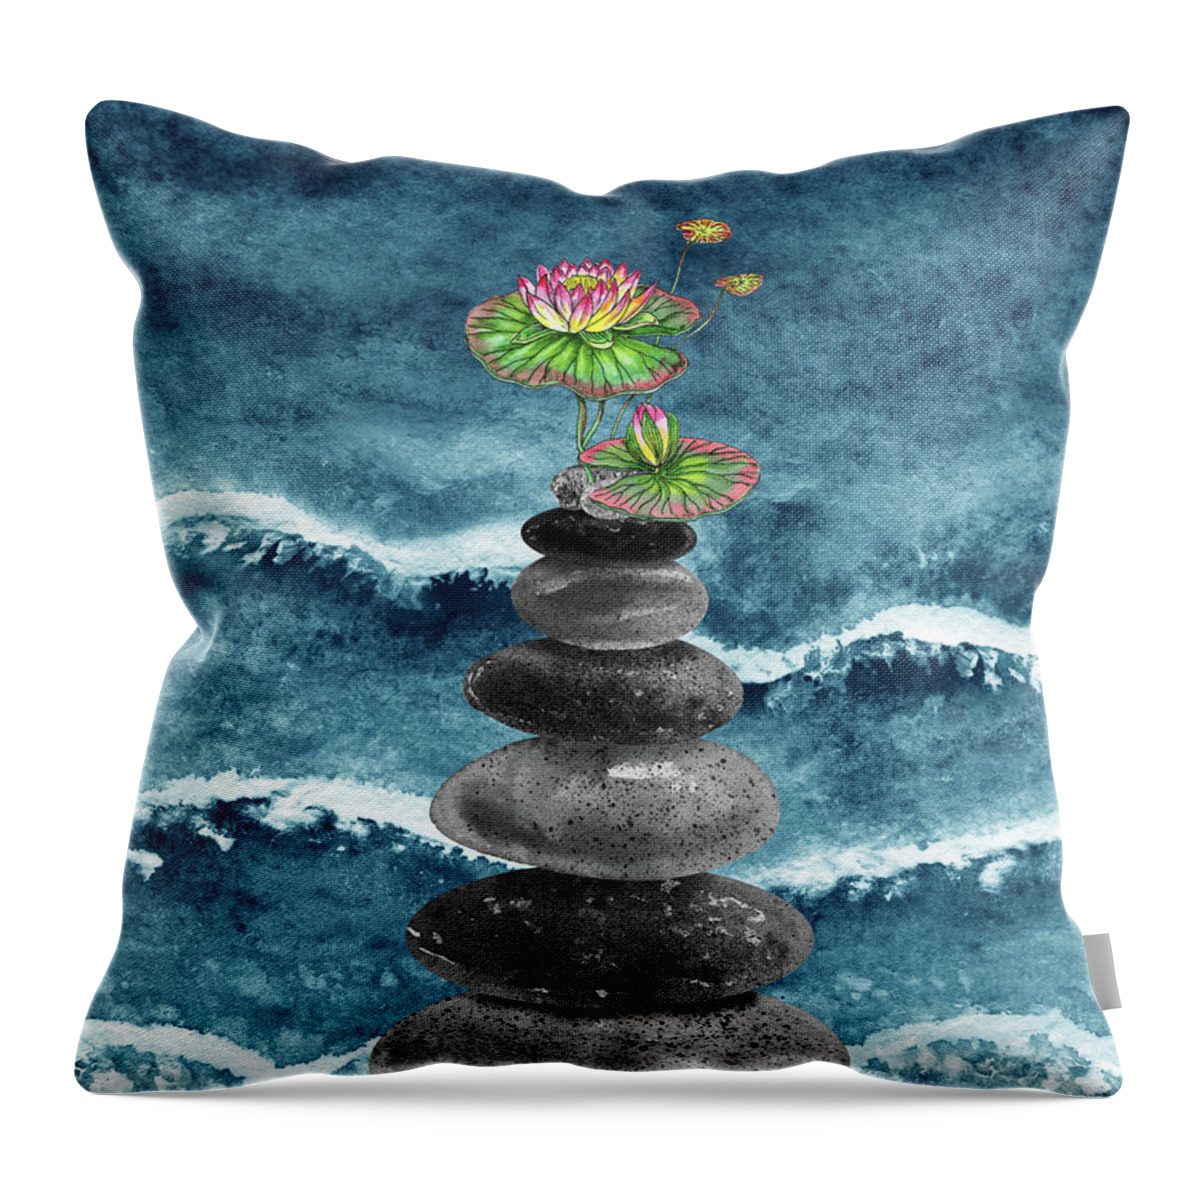 Zen Rocks Throw Pillow featuring the painting Zen Rocks Cairn Meditative Tower And Lotus Flower Watercolor by Irina Sztukowski